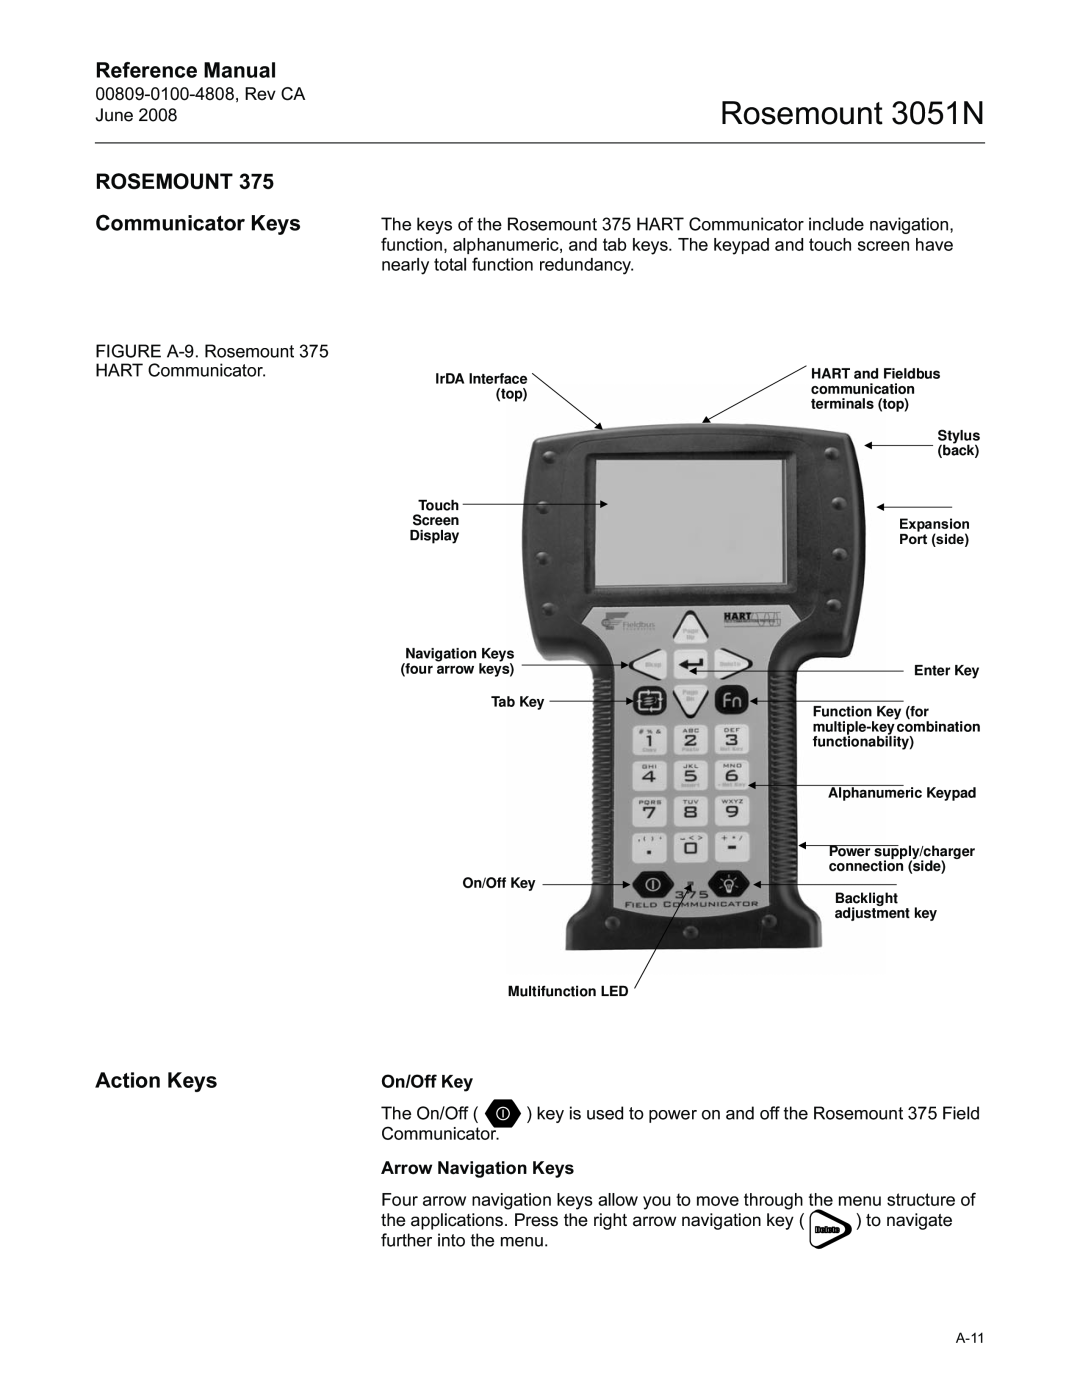 Emerson manual Rosemount 3051N, Reference Manual, Communicator Keys, Action Keys 